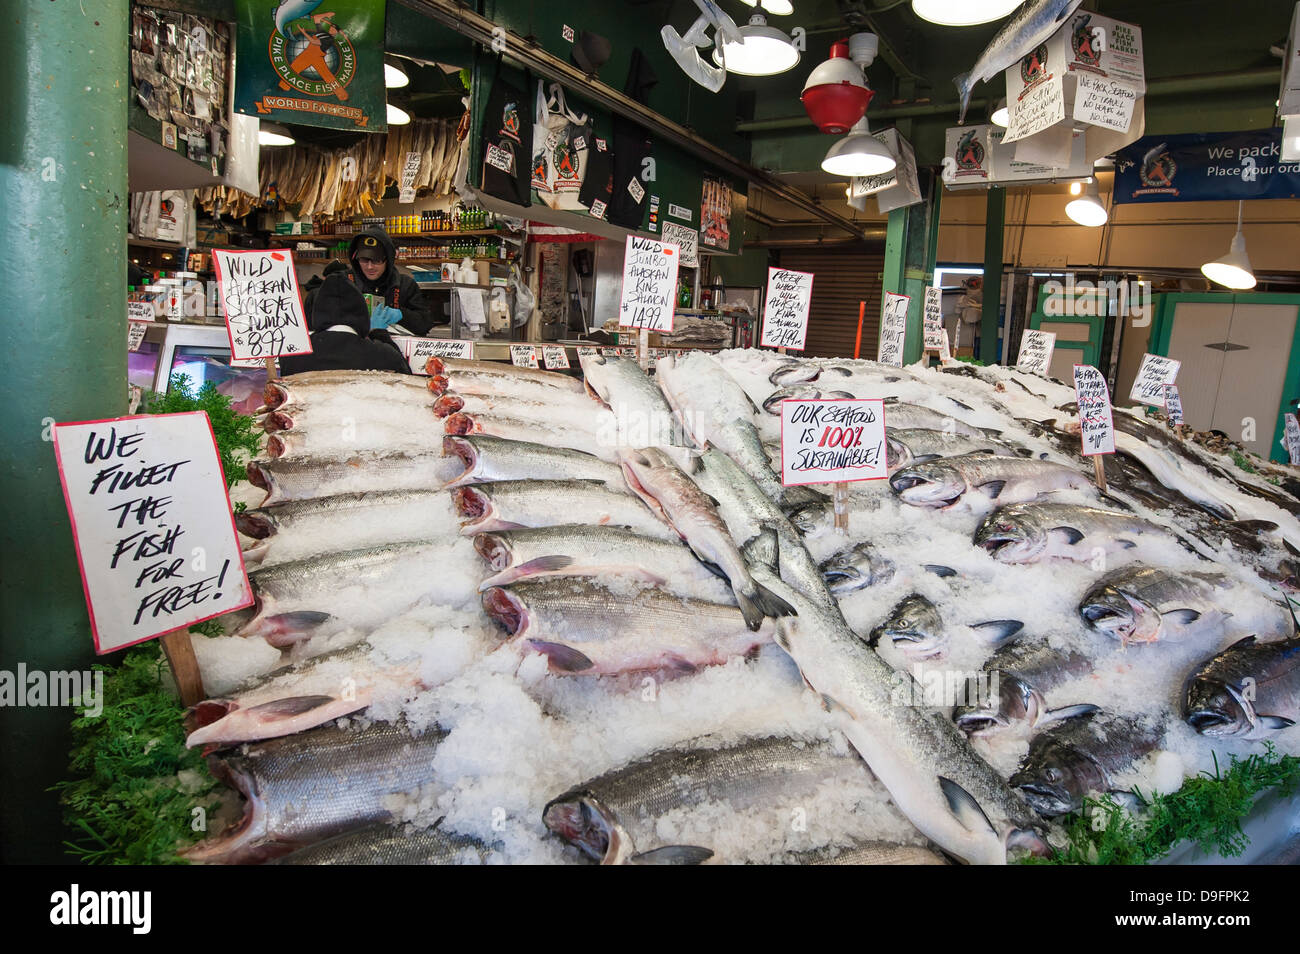 Pikes Place Market, Seattle, Washington State, USA Stock Photo